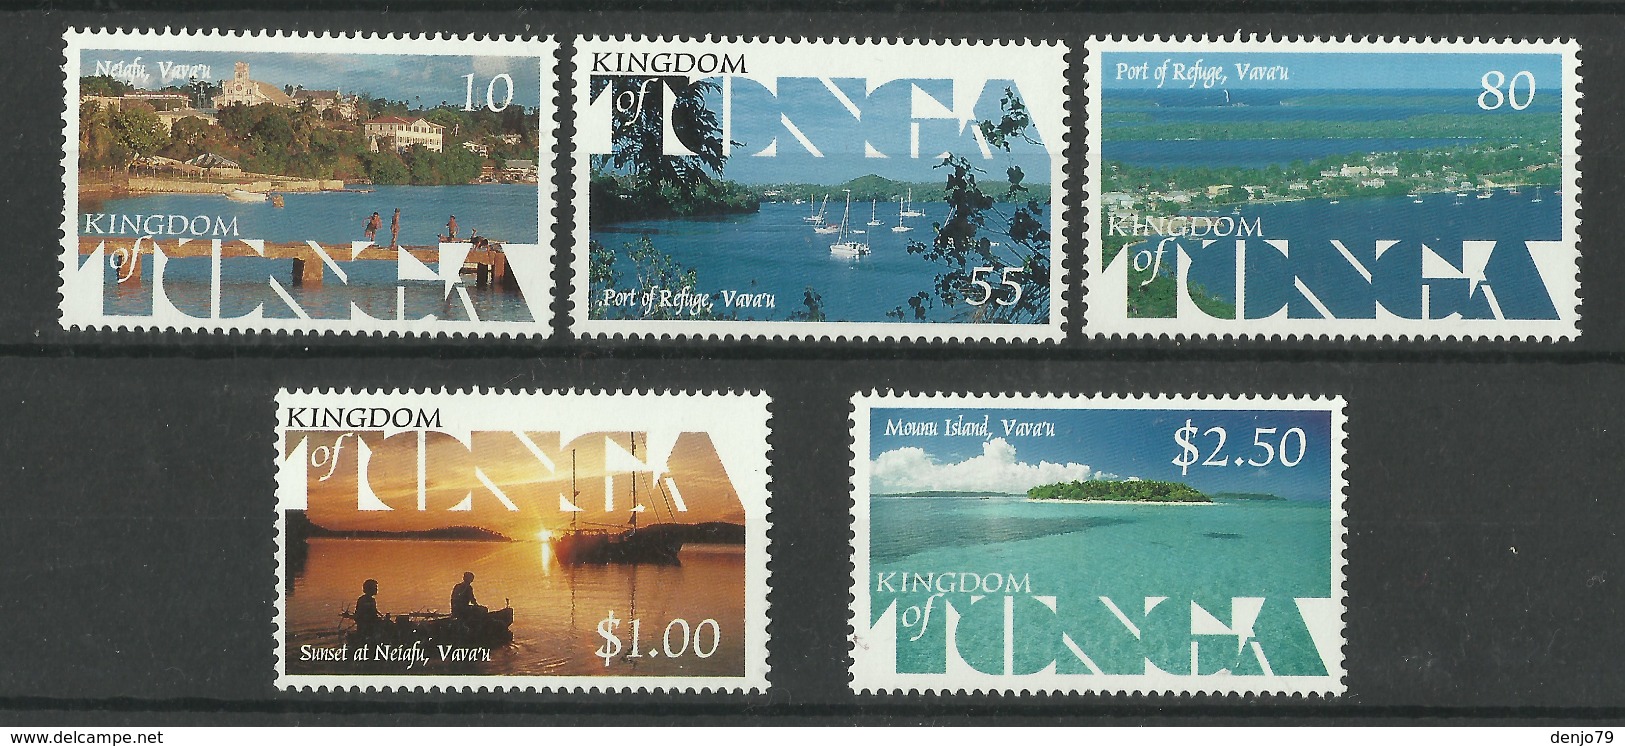 TONGA  1999  SCENES,LANDSCAPES OF VAVA'U  SET  MNH - Tonga (1970-...)